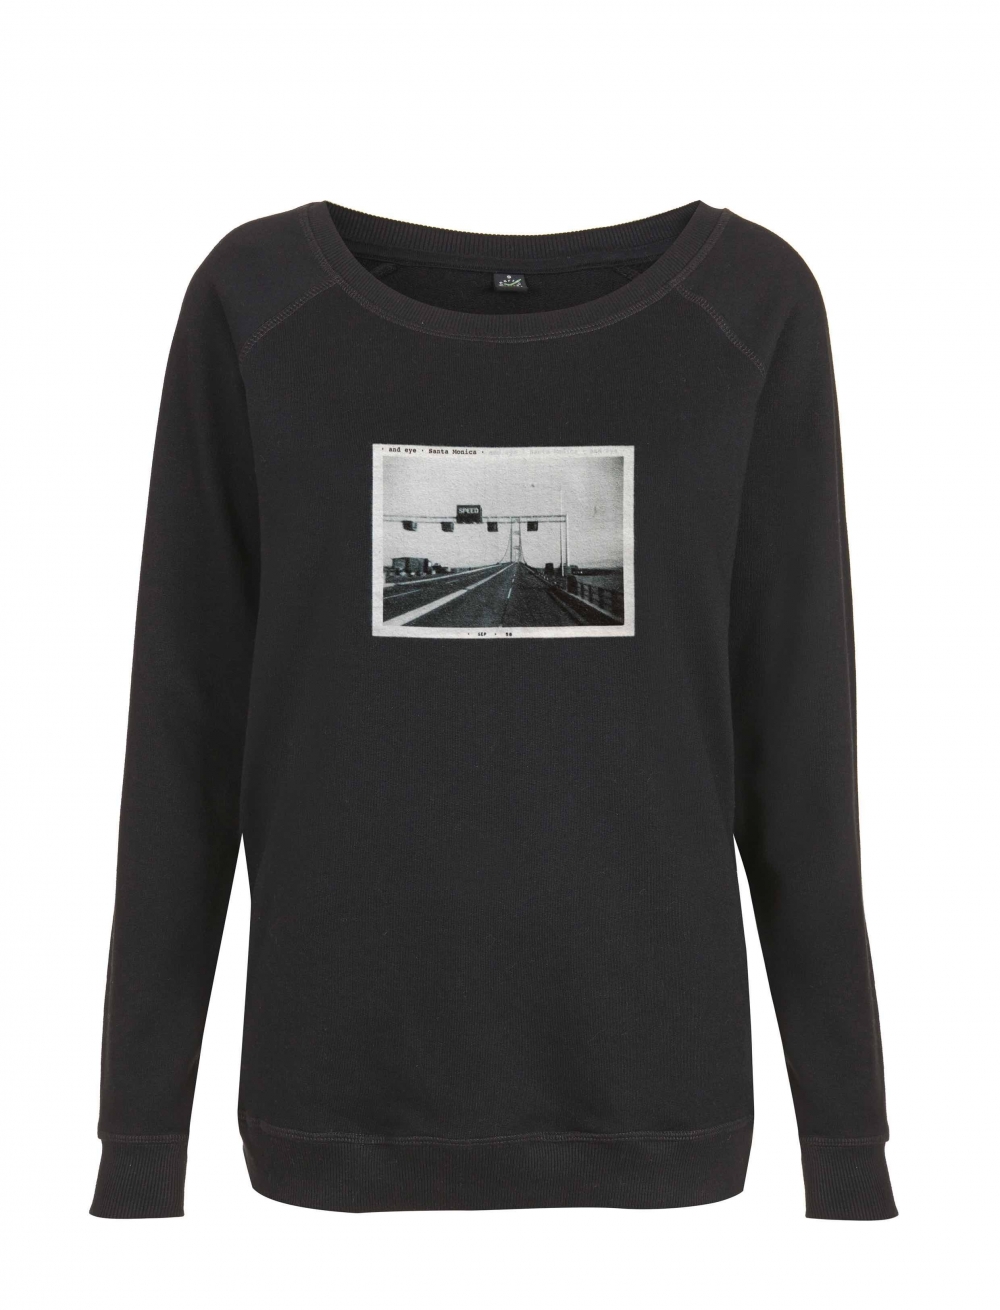 Women´s organic sweatshirt with a vintage image